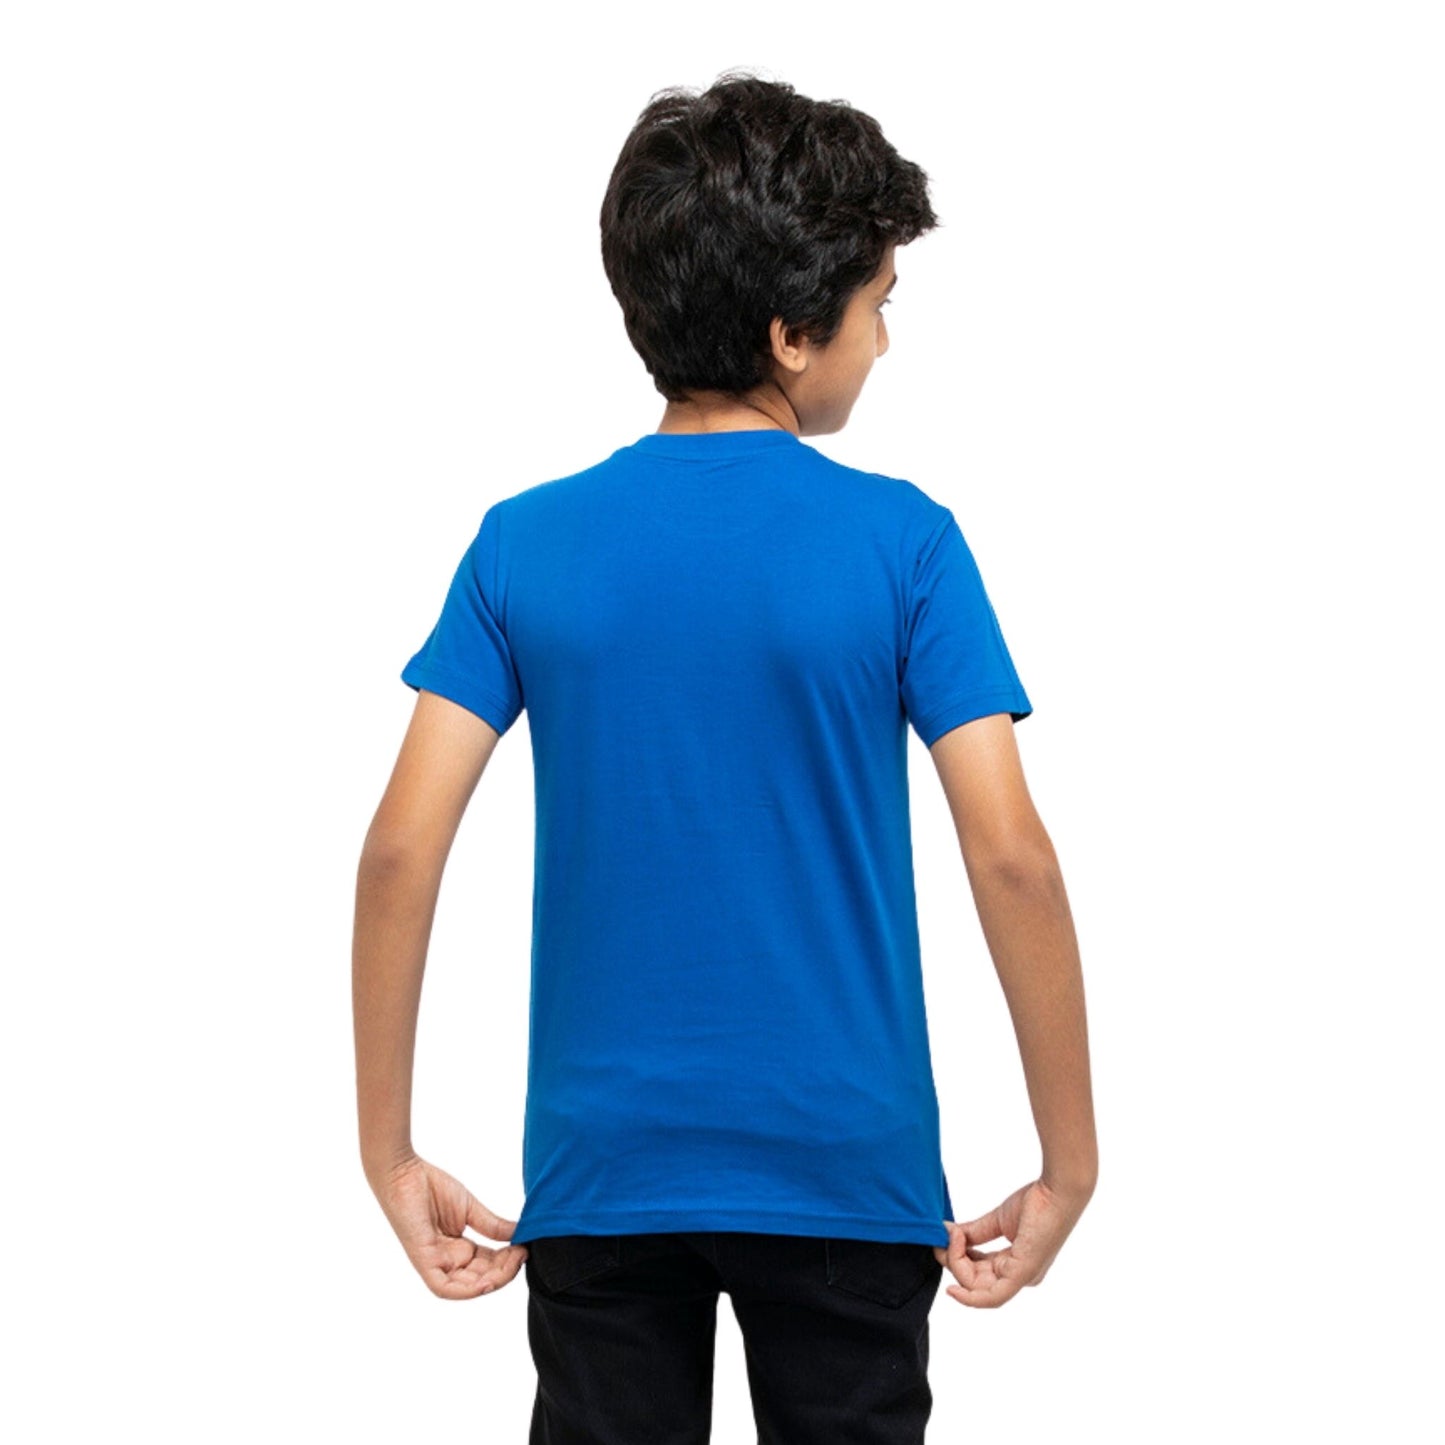 Basketball Print Boys Cotton T-Shirt (blue)